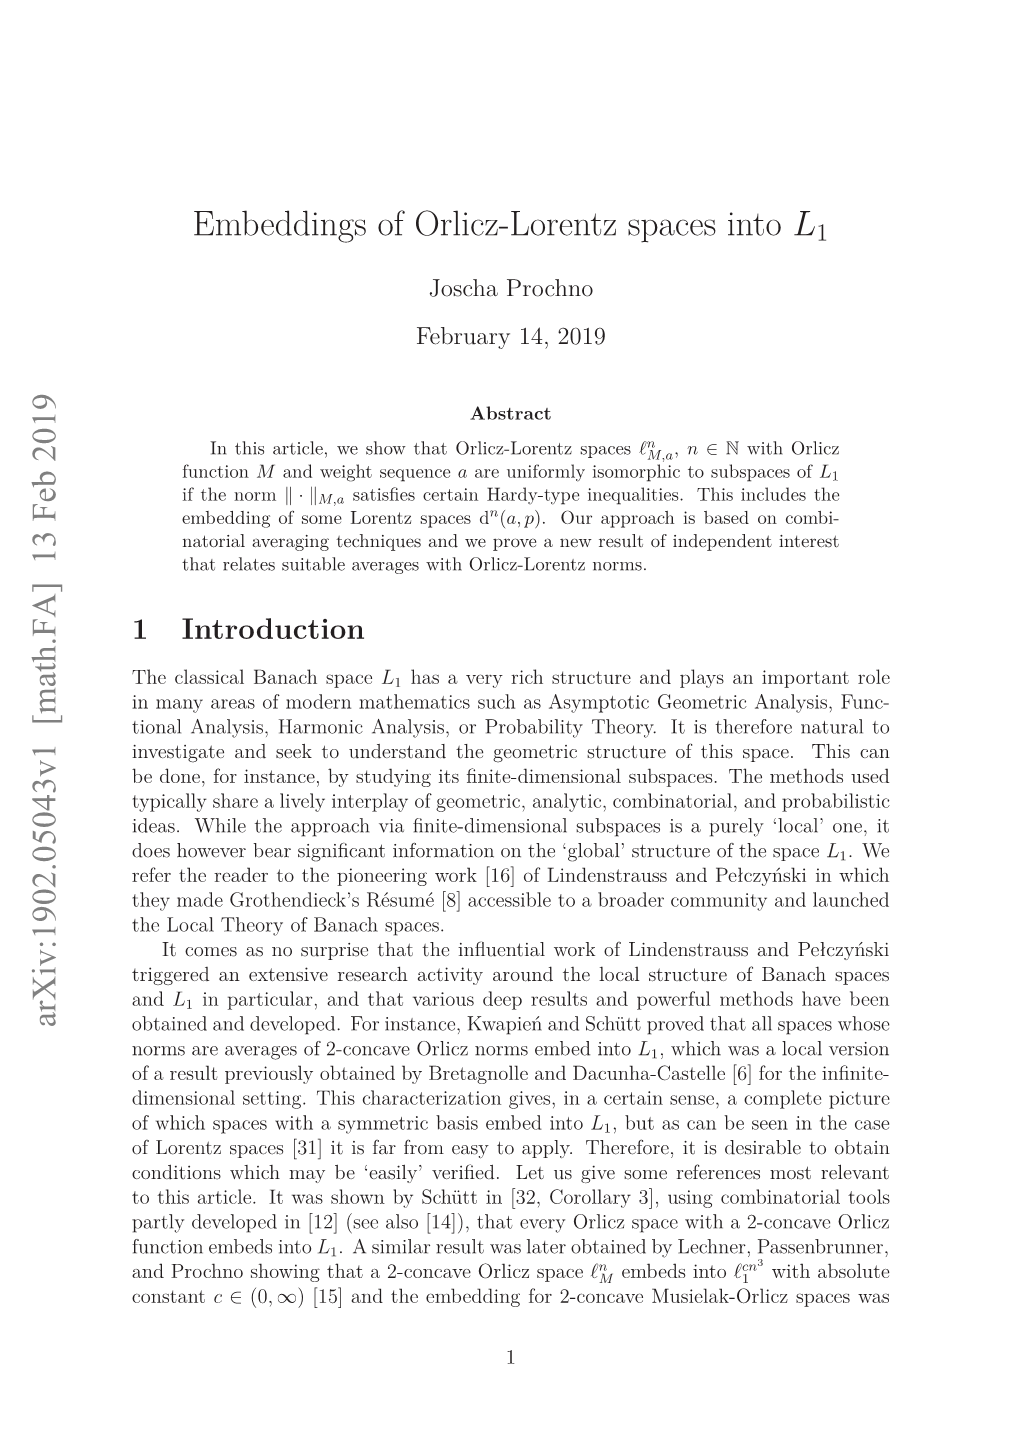 Embeddings of Orlicz-Lorentz Spaces Into $ L 1$